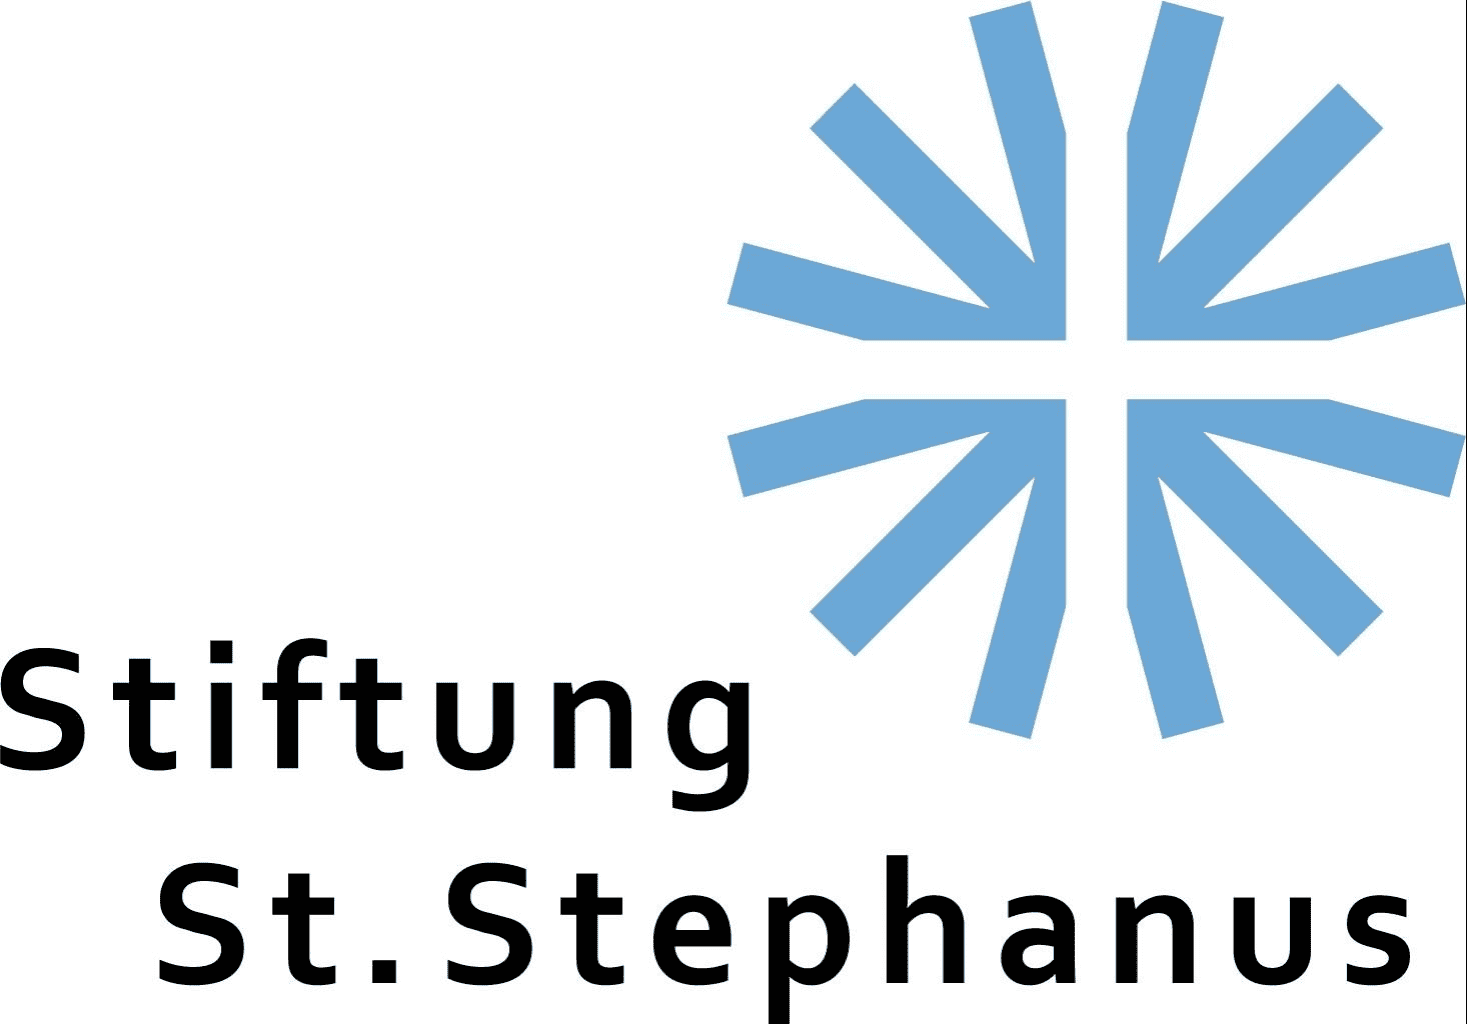 Stiftung St. Stephanus